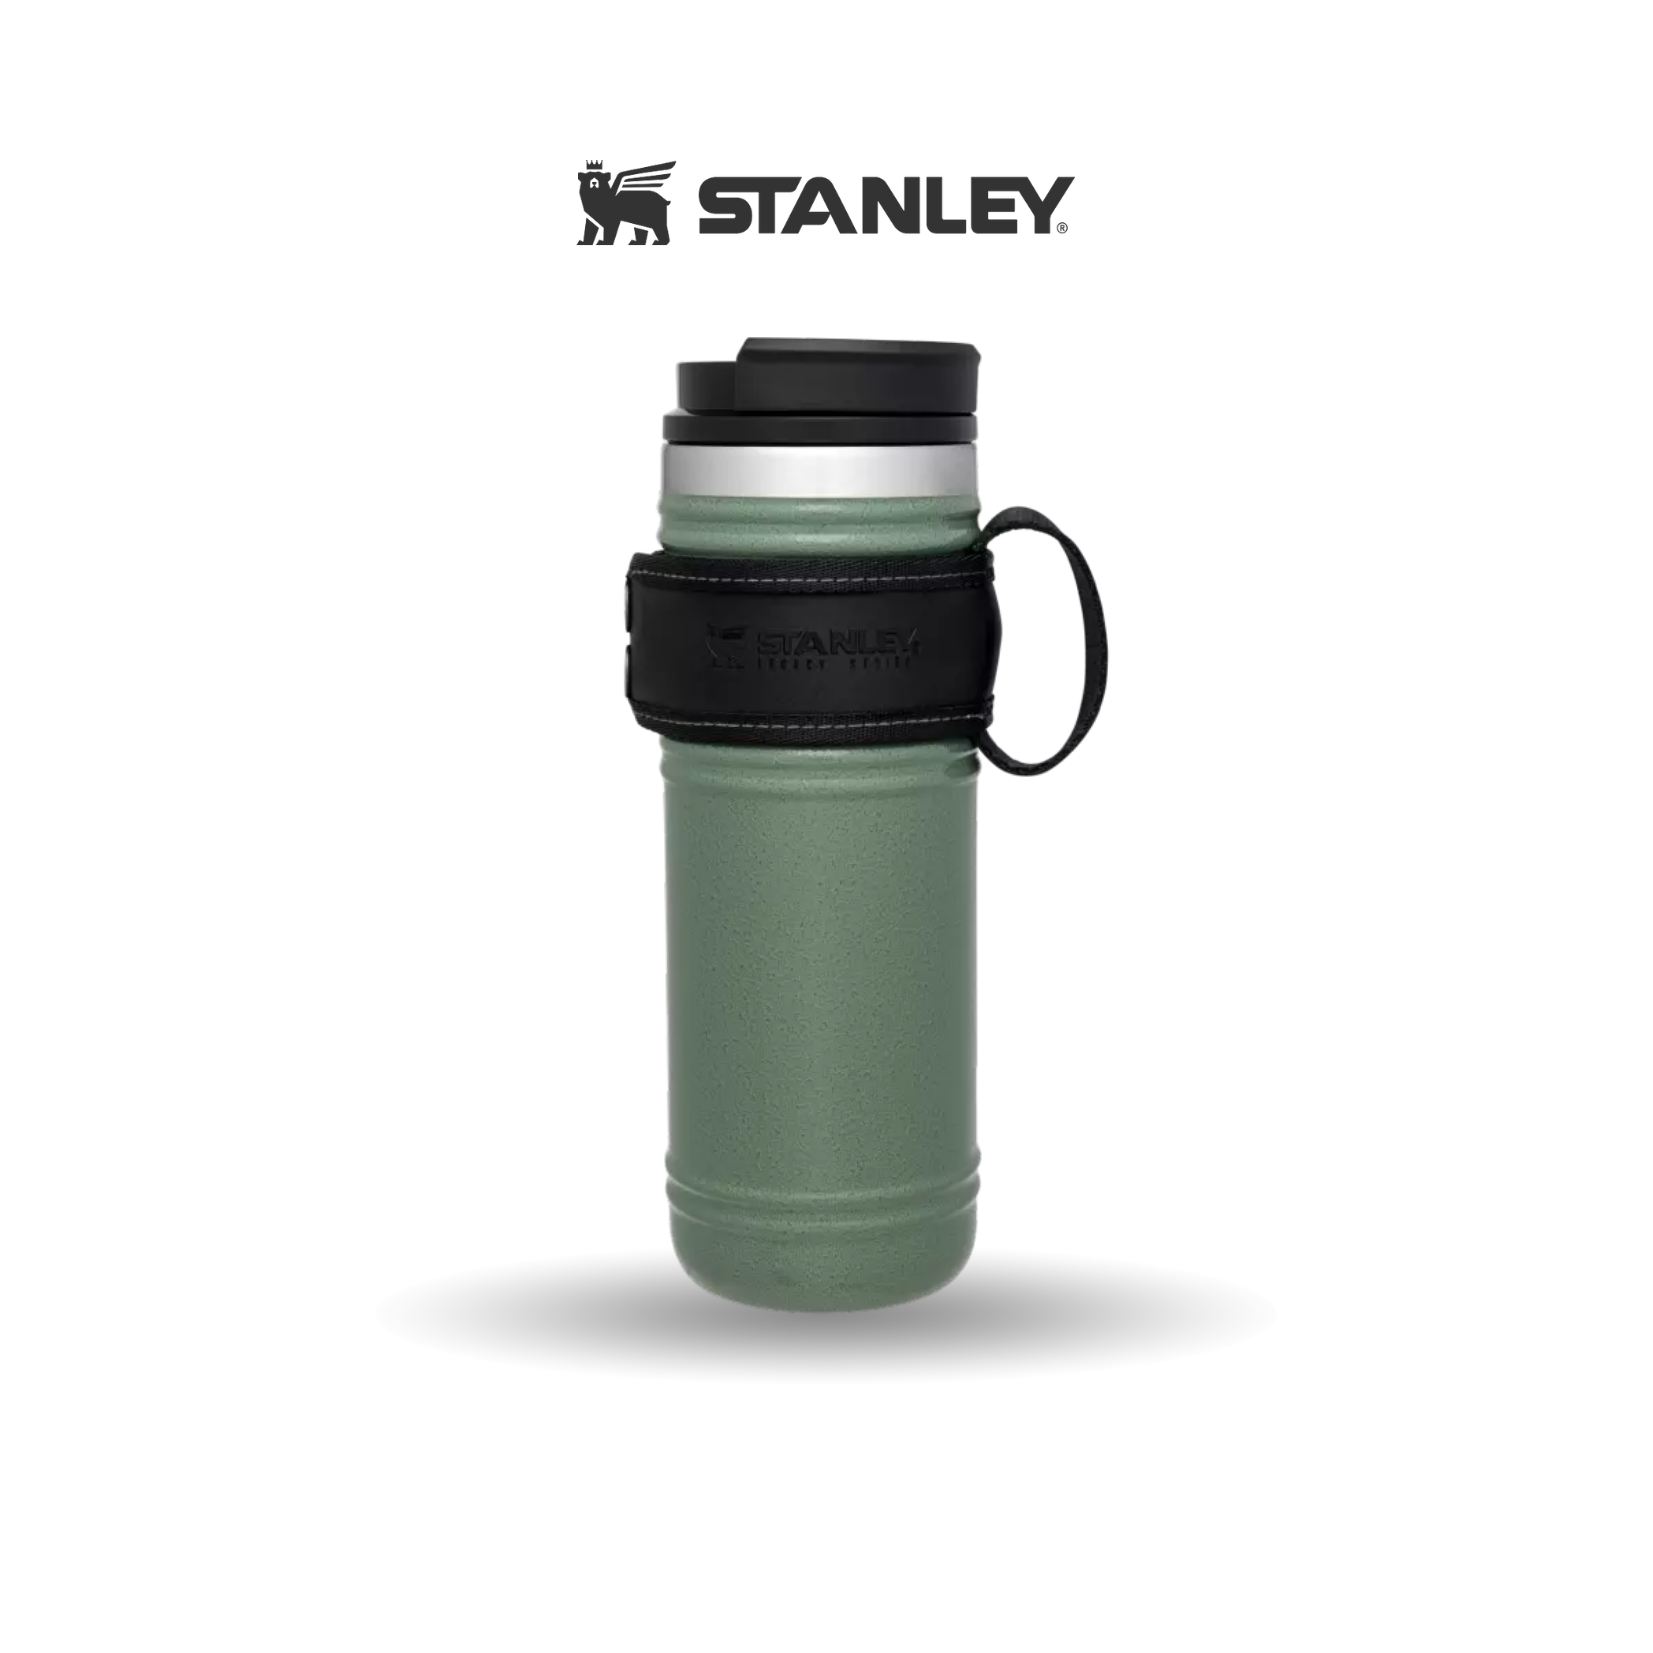 Stanley Legacy Neverleak Travel Mug - 18/8 Stainless Steel, BPA-Free Leakproof And Packable Mug Easily Removable Grip Wrap